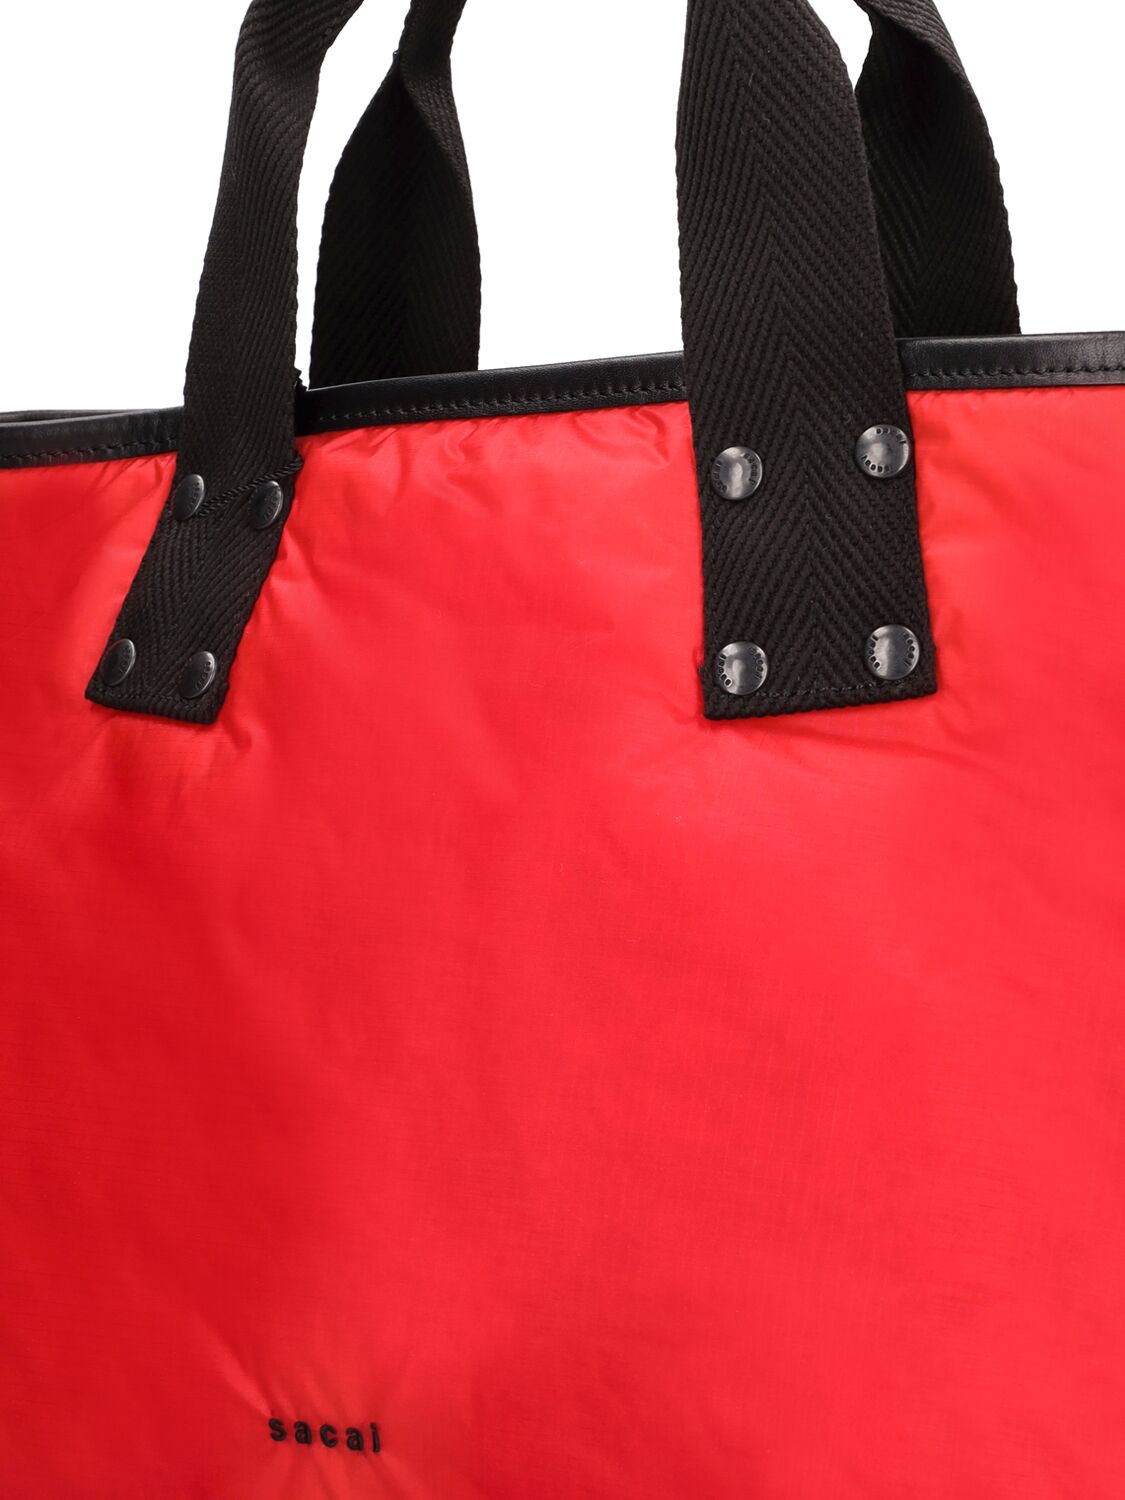 Shop Sacai Skytex Medium Tote Bag In Red